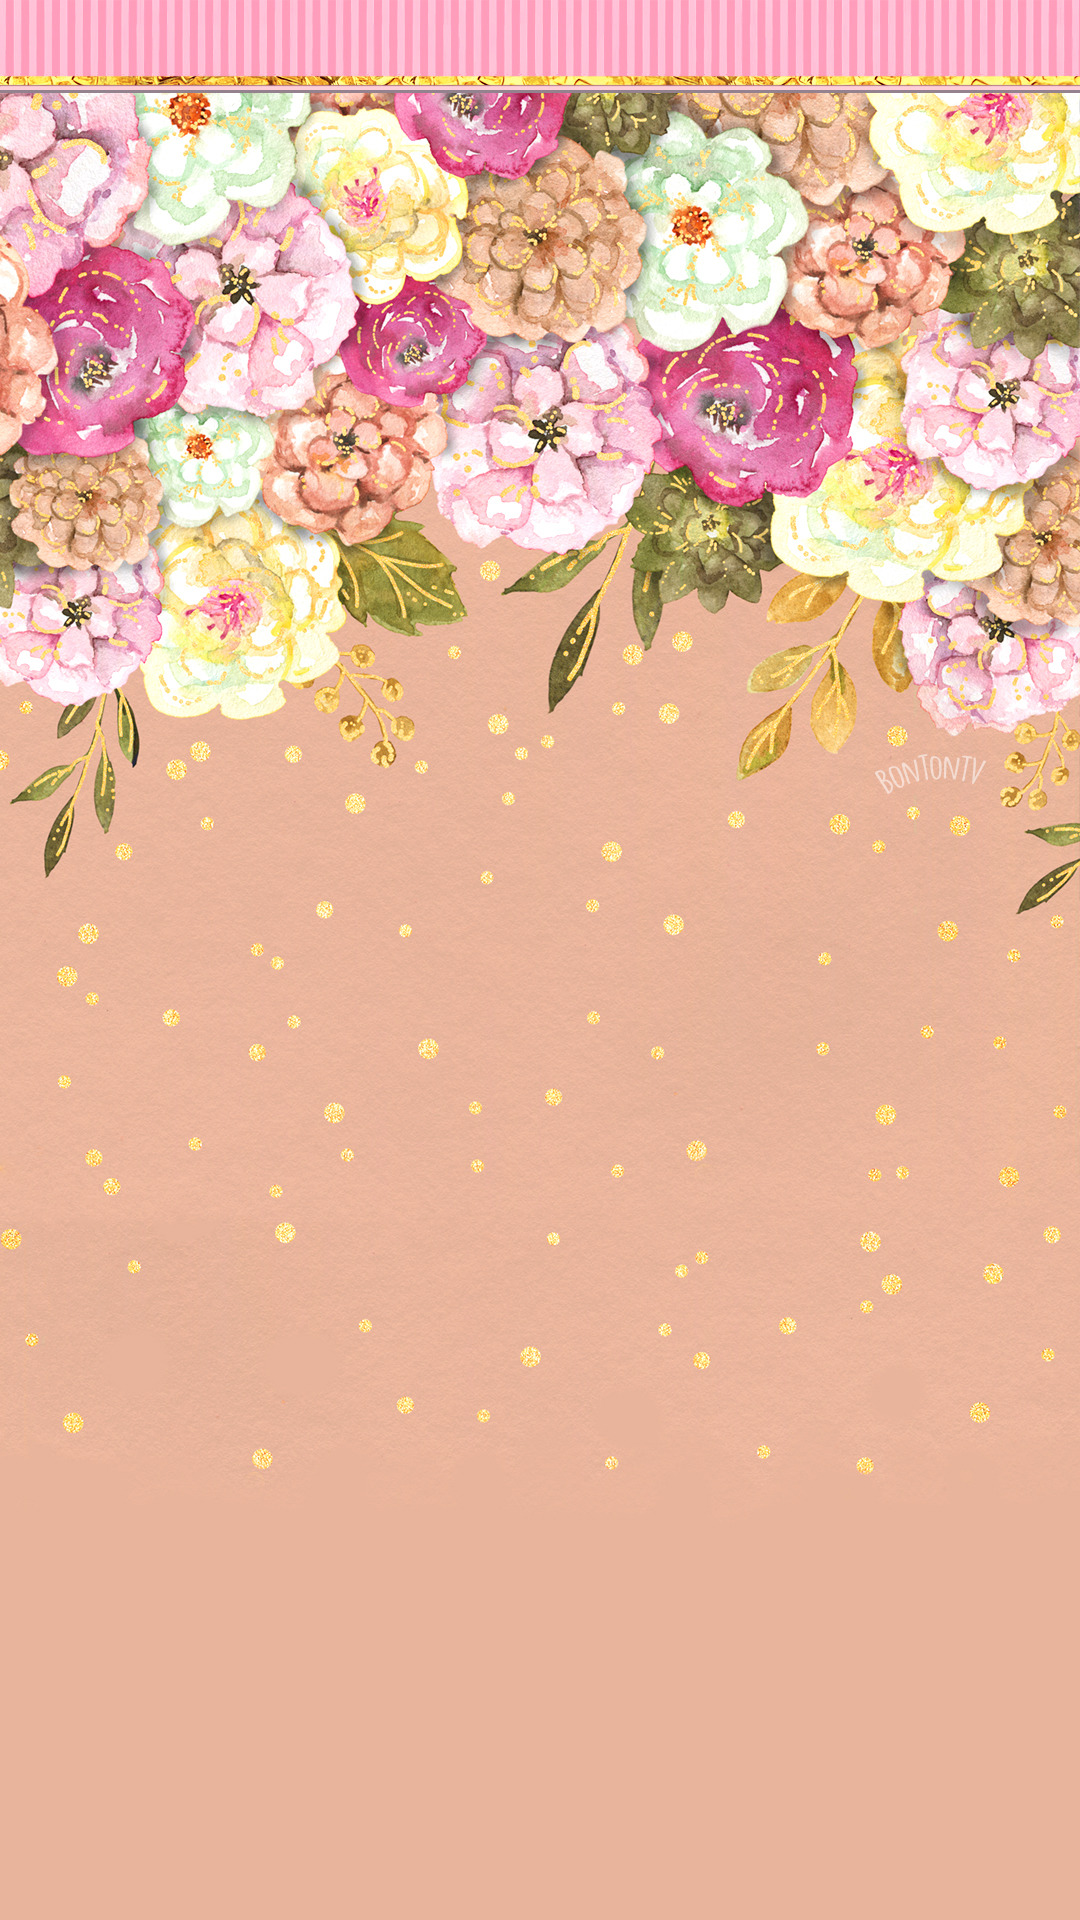 Phone Wallpaper HD Flowers Cute Glitter Background BonTon TV Bac. Pink flowers wallpaper, HD flower wallpaper, Vintage flowers wallpaper